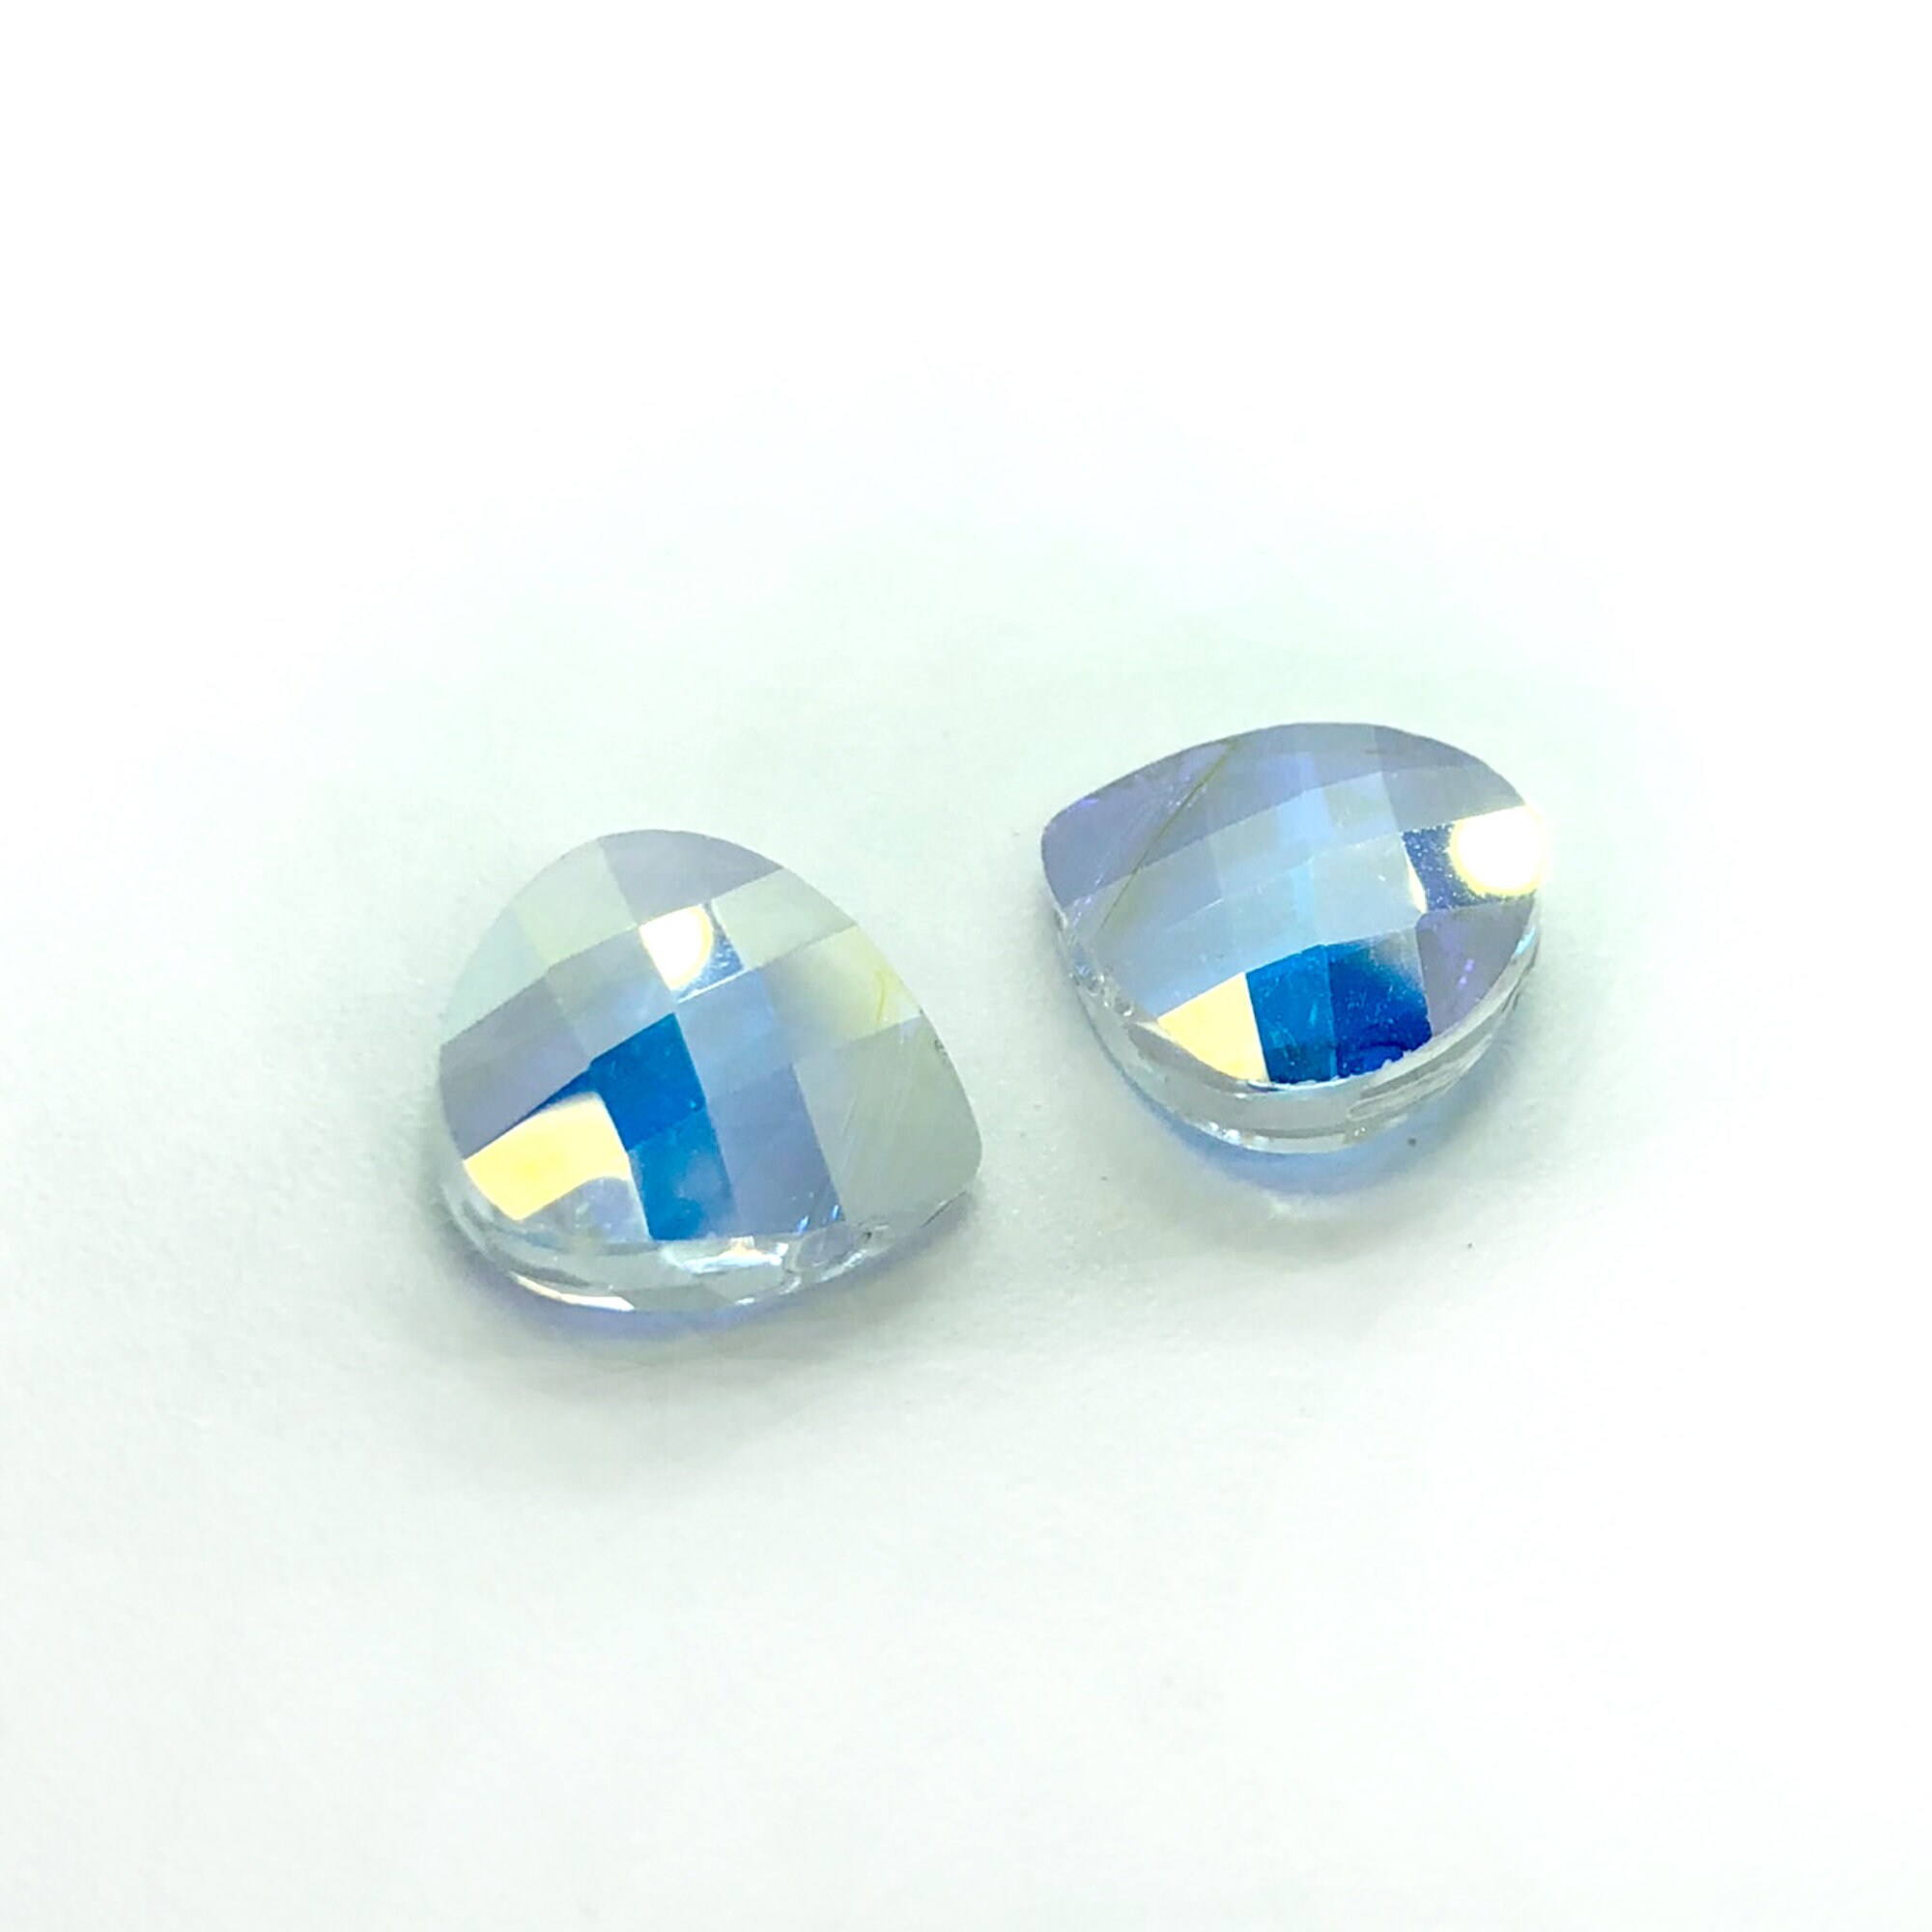 12pc Swarovski Crystal Light Siam AB Geometric Shape 5011 Beads; Vintage